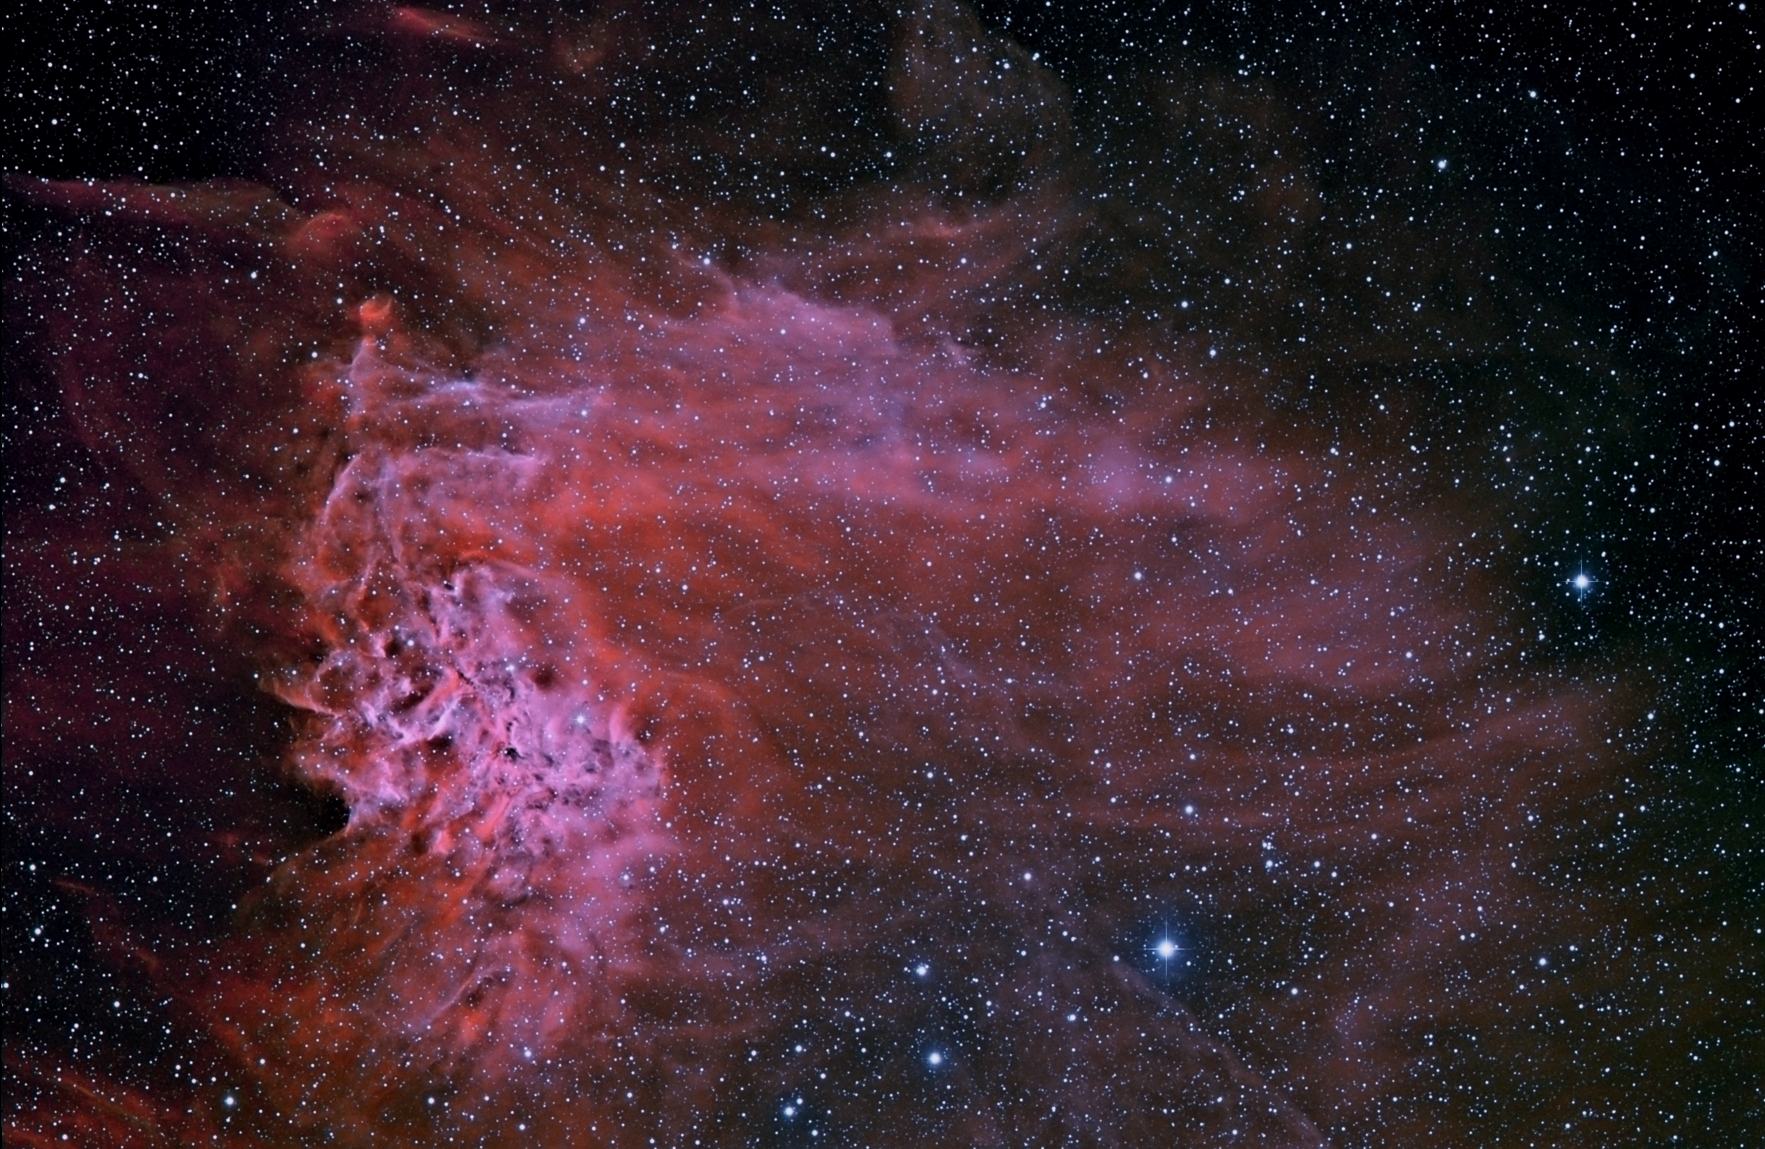 The flaming star nebula